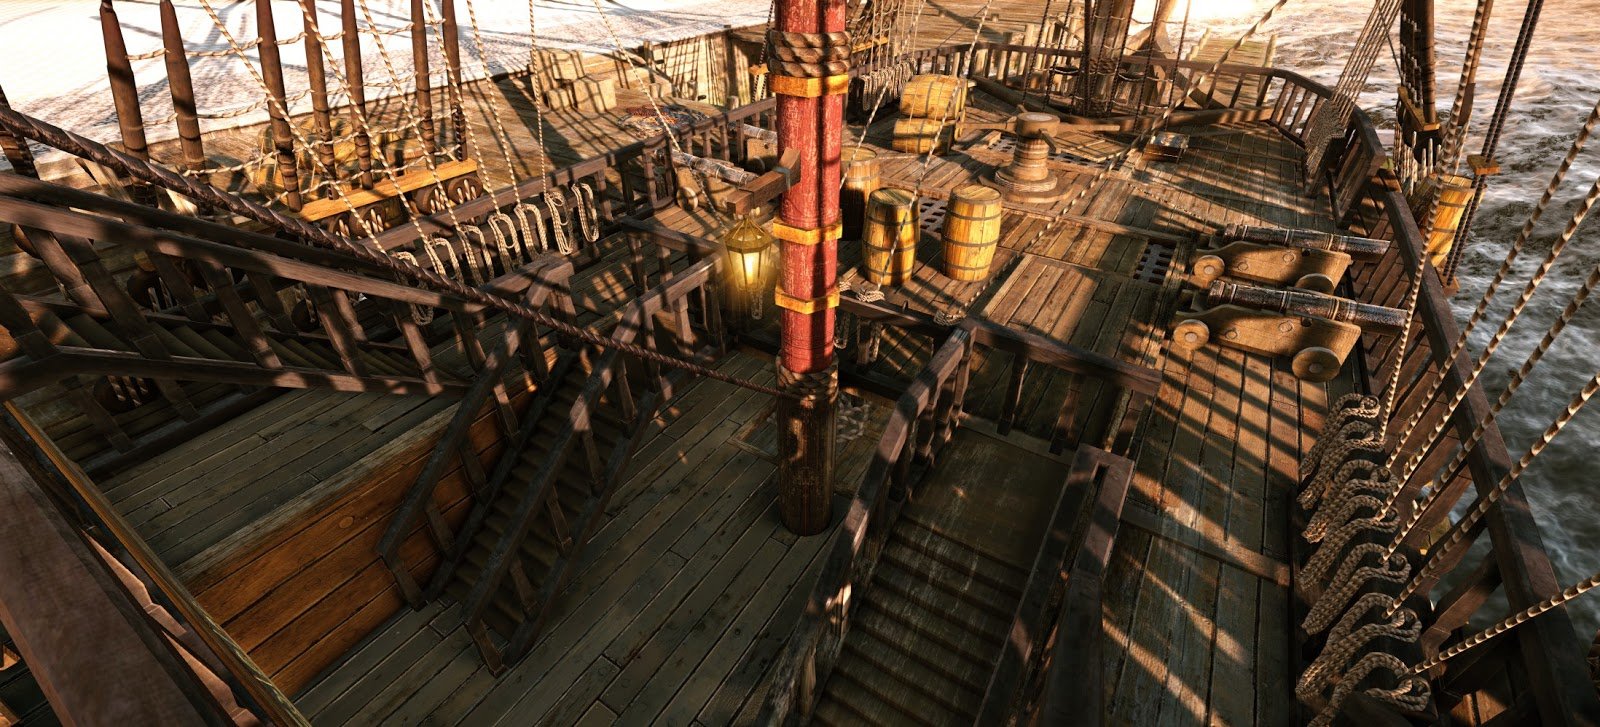 Три палуба. Палуба пиратского корабля. Палуба старинного корабля. Верхняя палуба корабля. Палуба вид сверху.